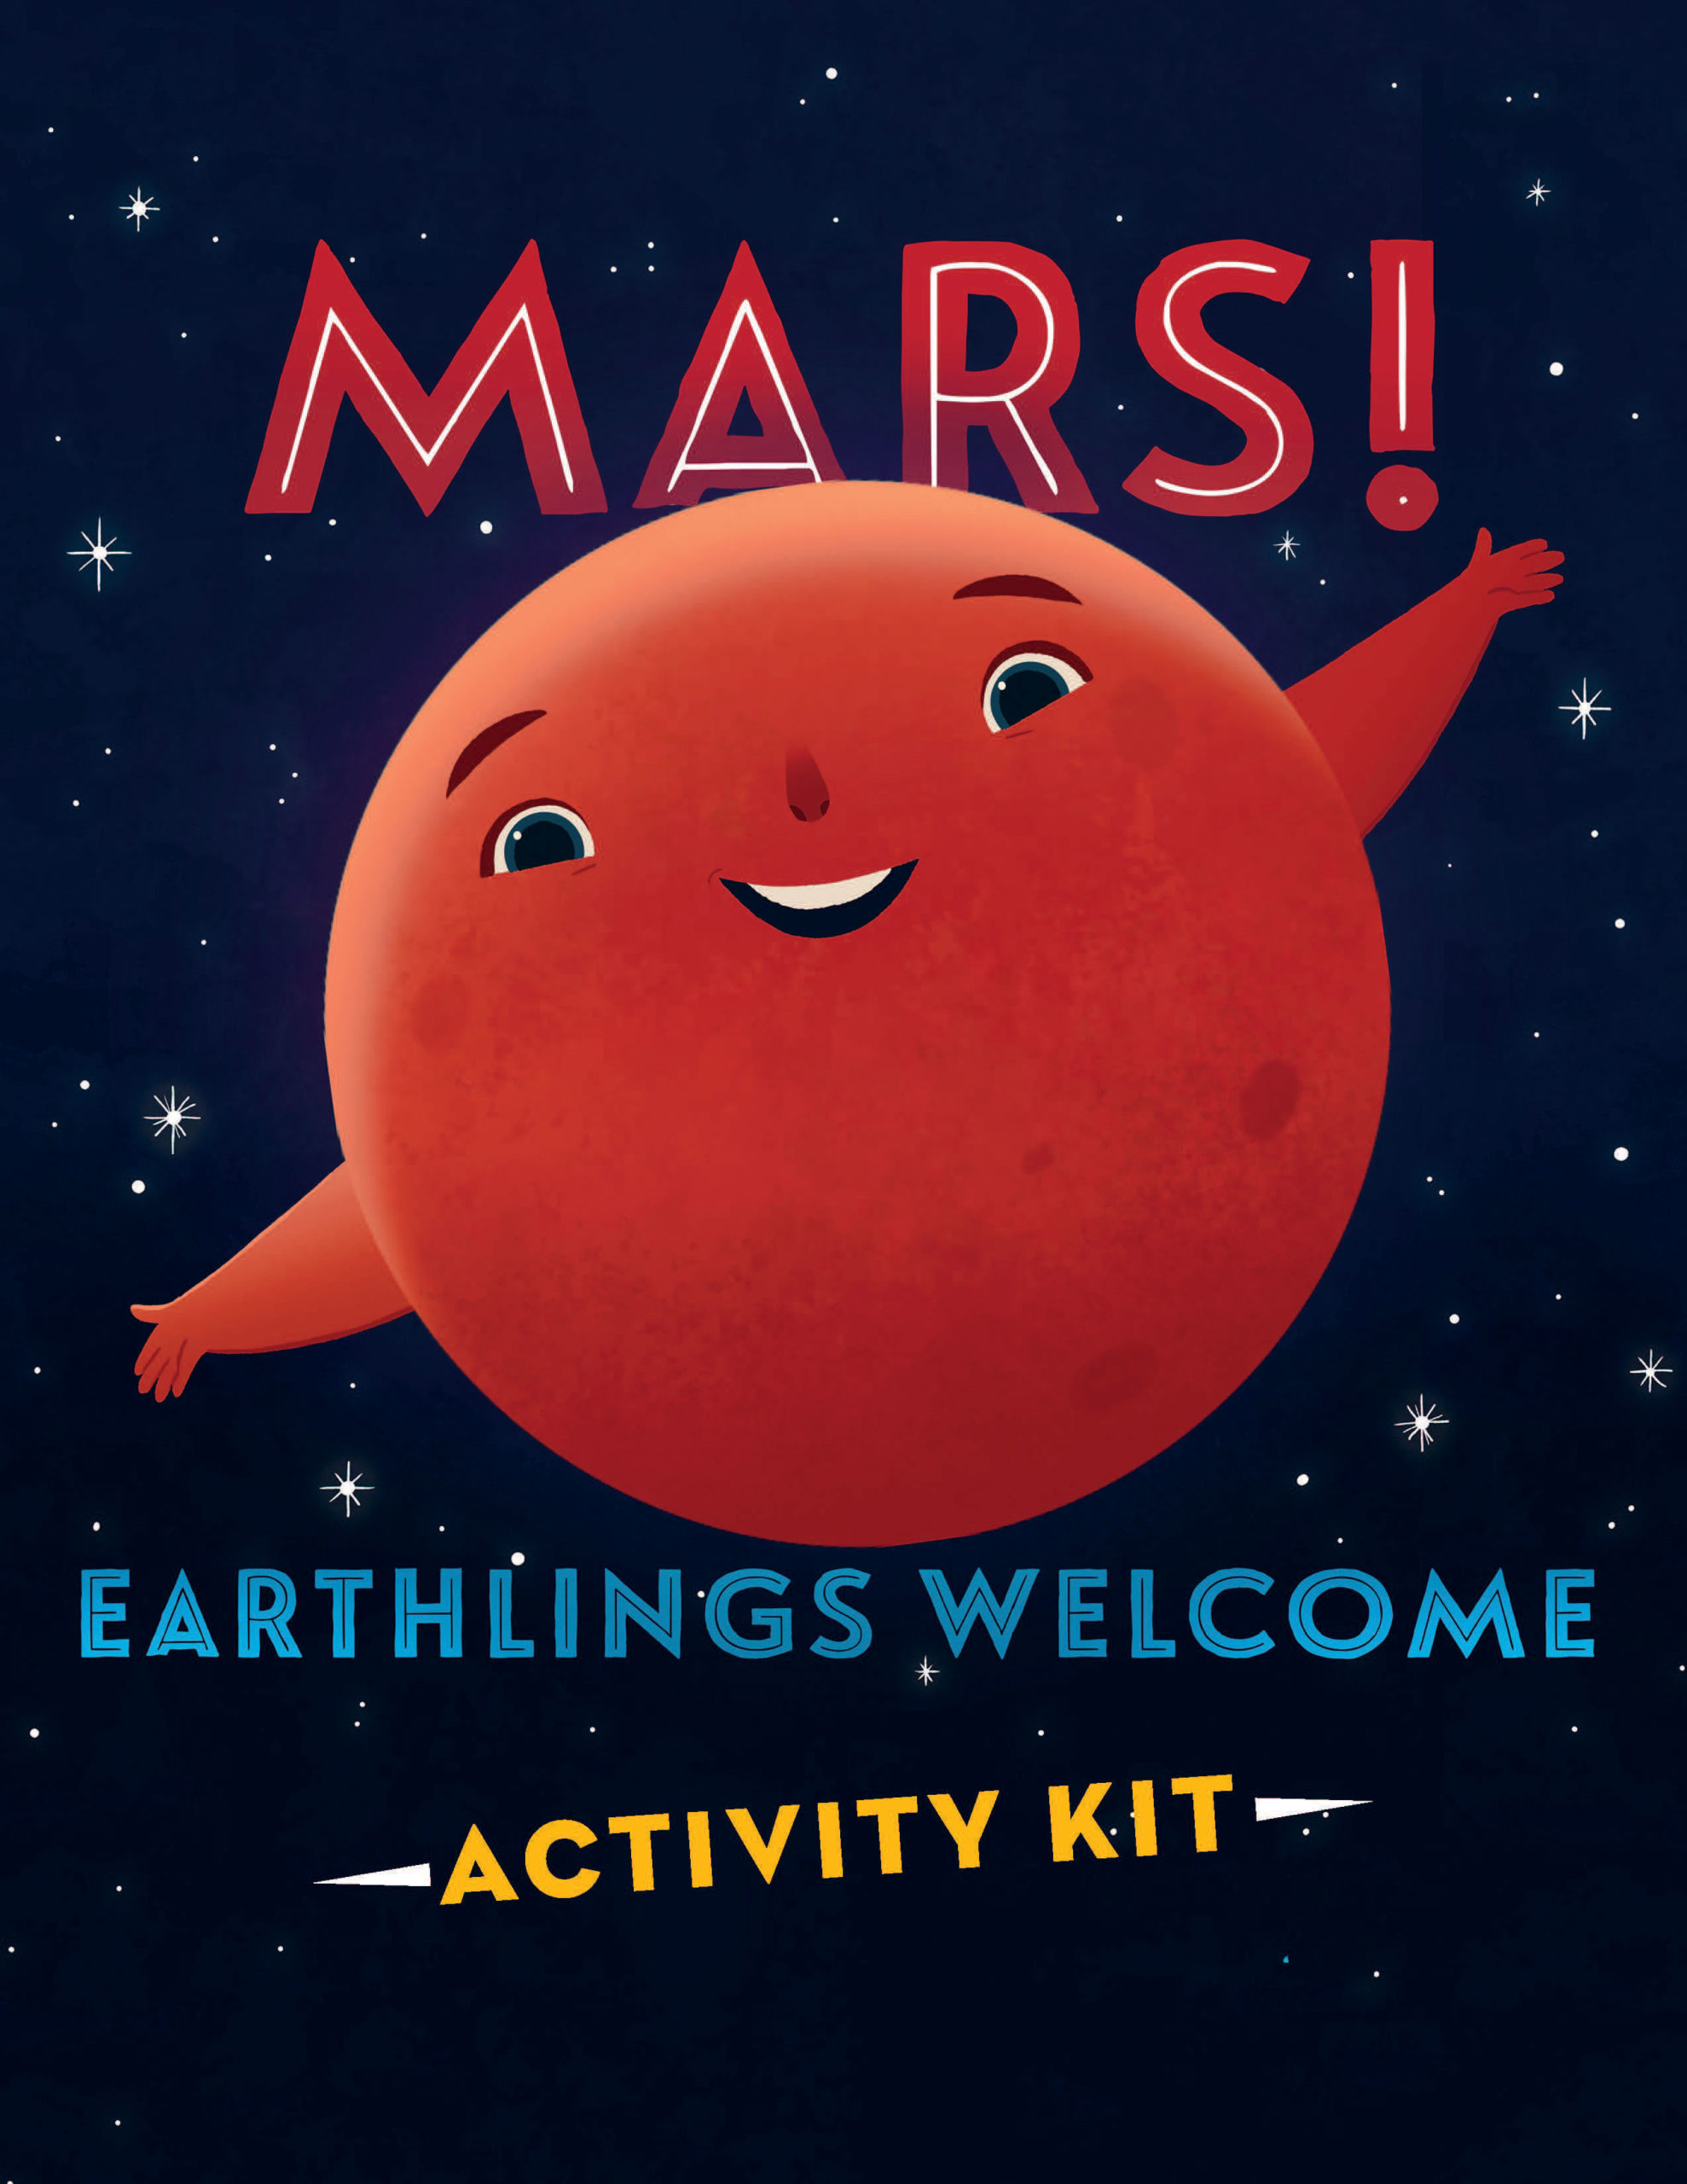 Mars! Activity Kit